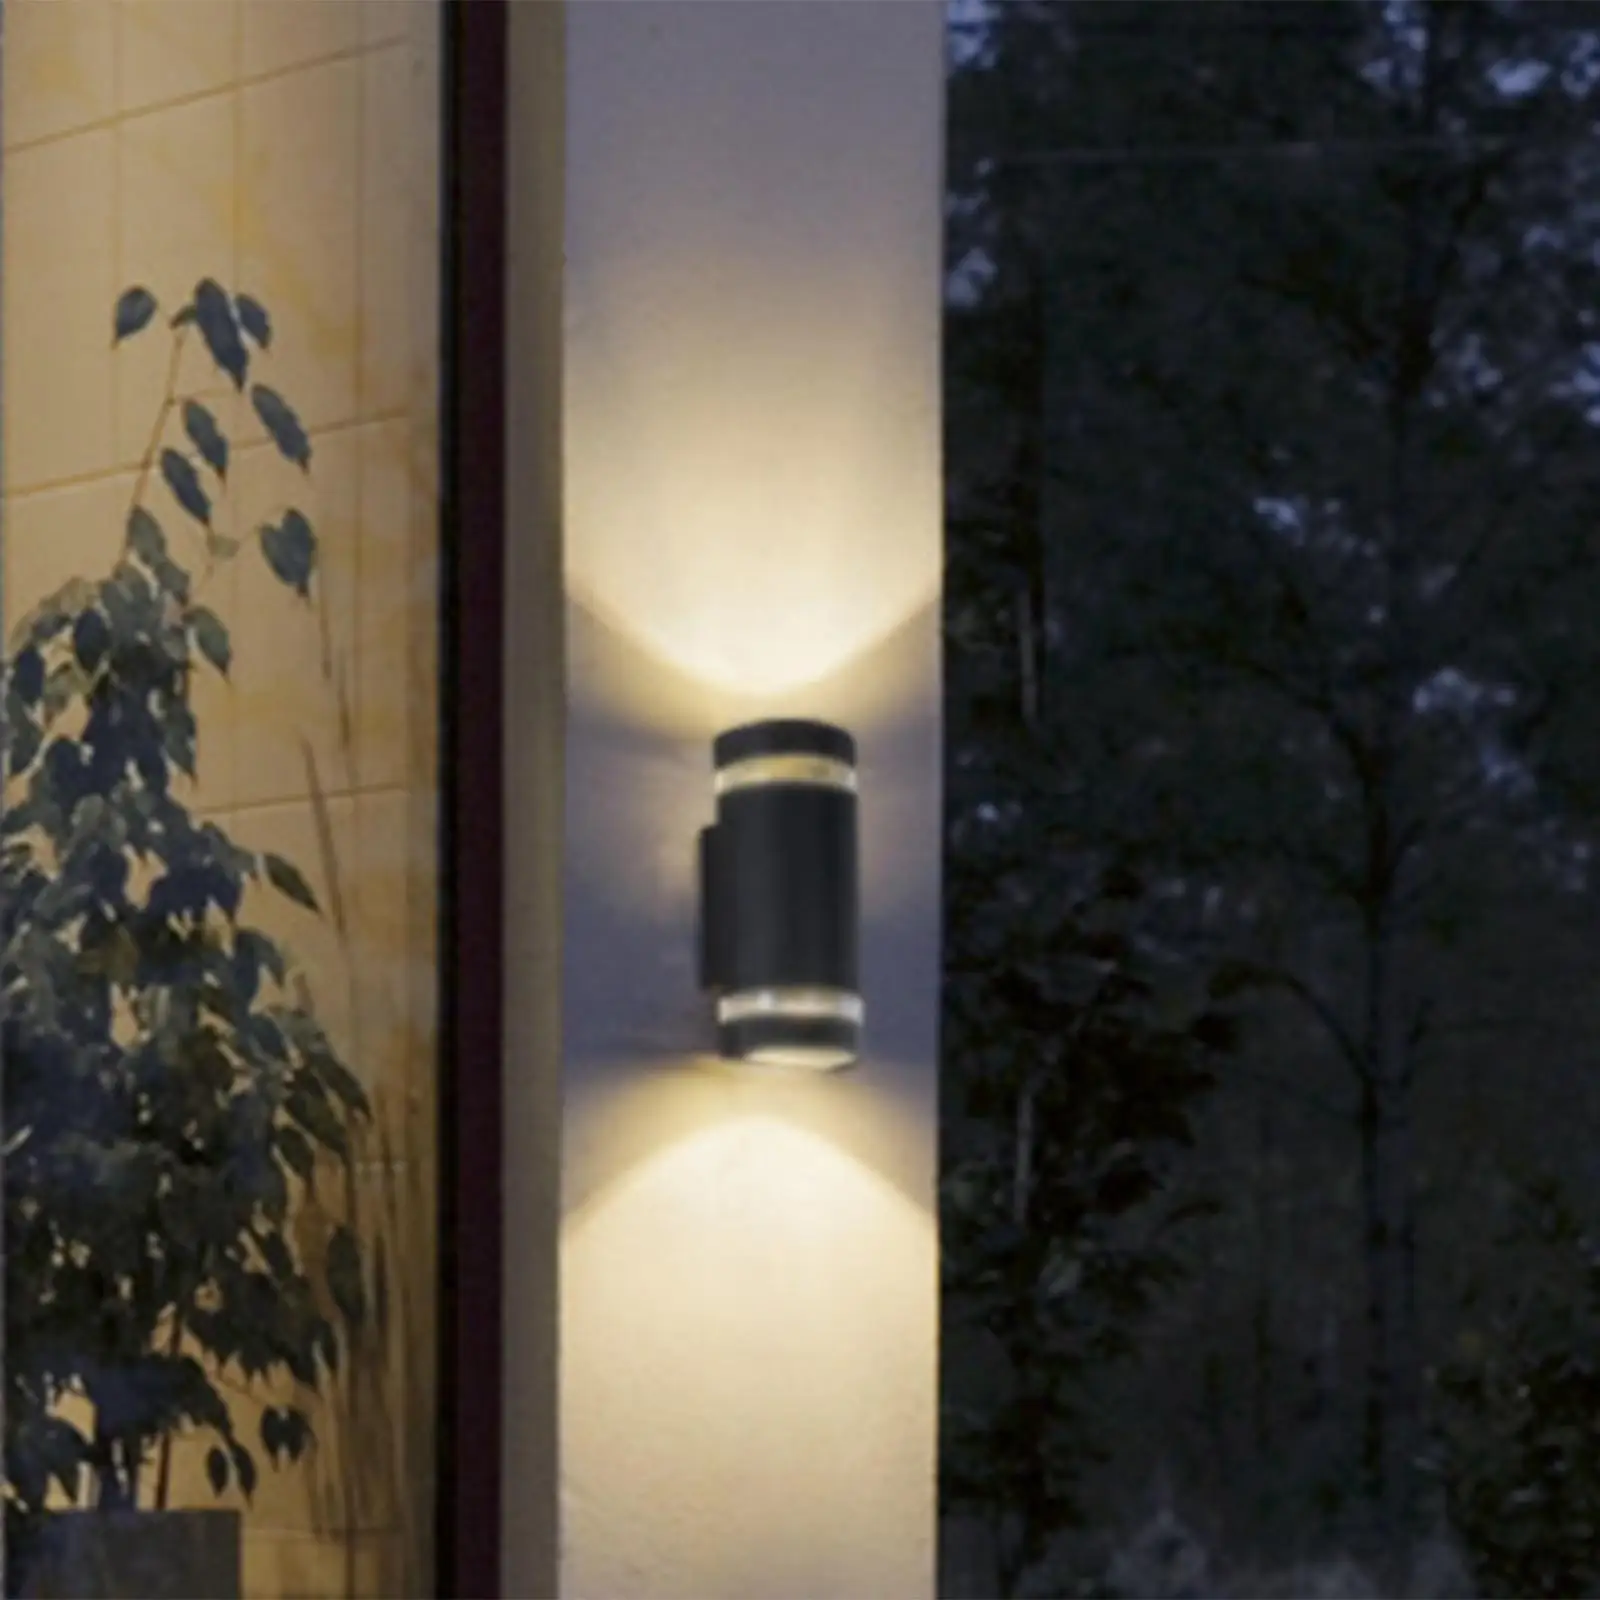 LED Outdoor Up and Down Wall Light Aluminum Decorative Porch Lamp Bathroom Bar Decor Lighting Fixture Sconce Luminaire